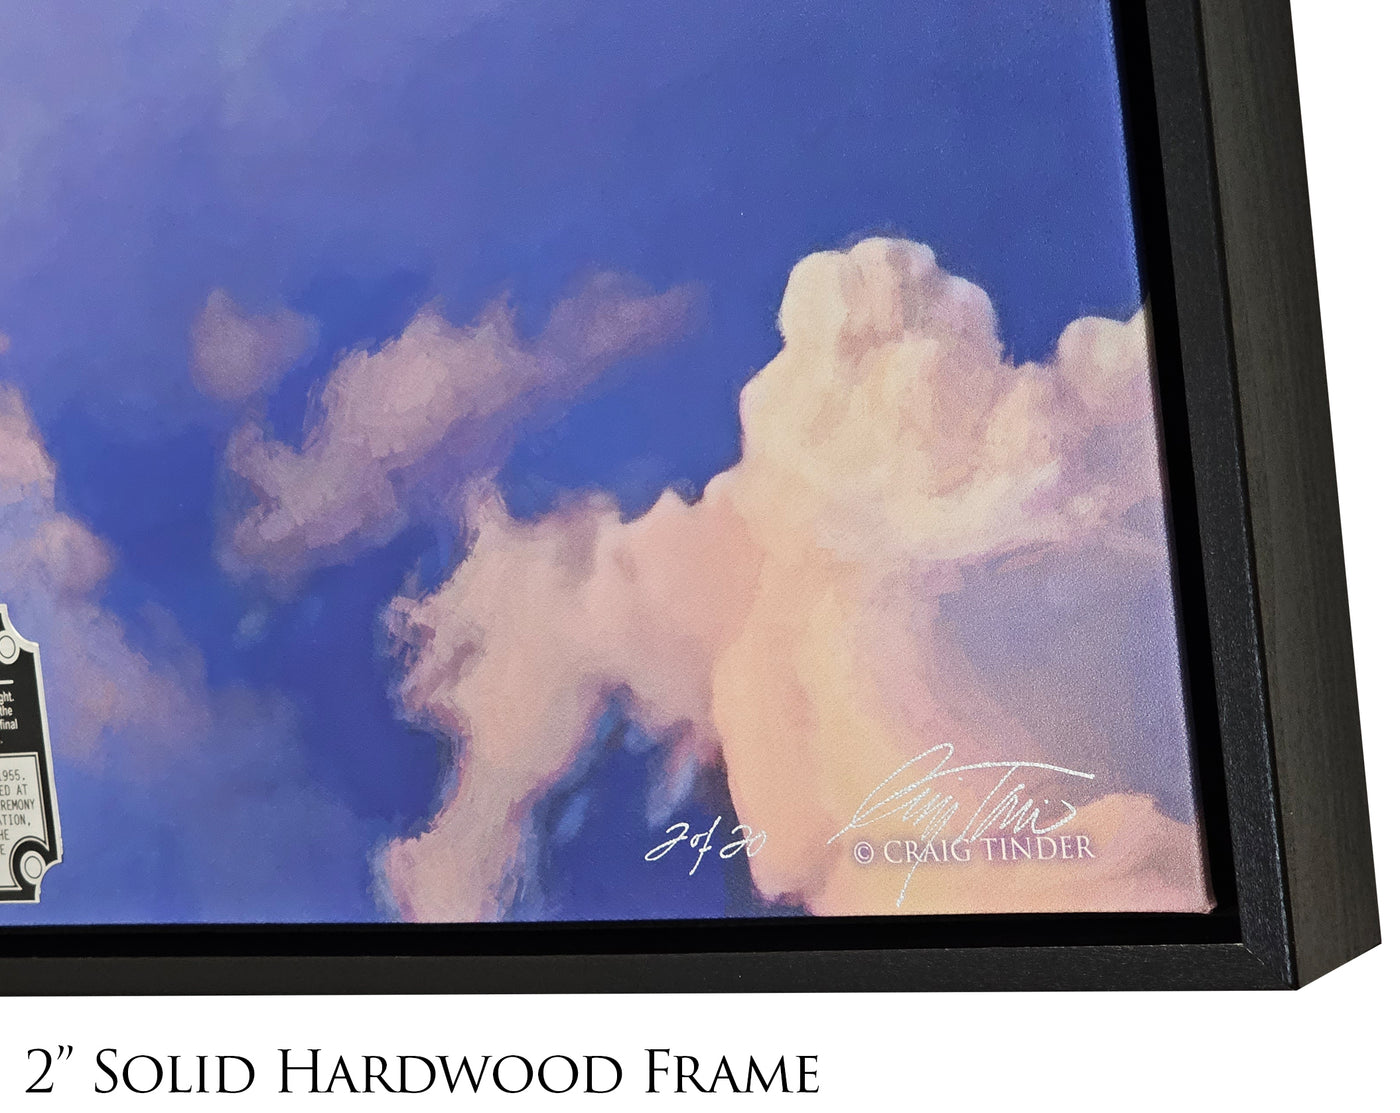 Each framed canvas has a 2-inch solid hardwood frame.